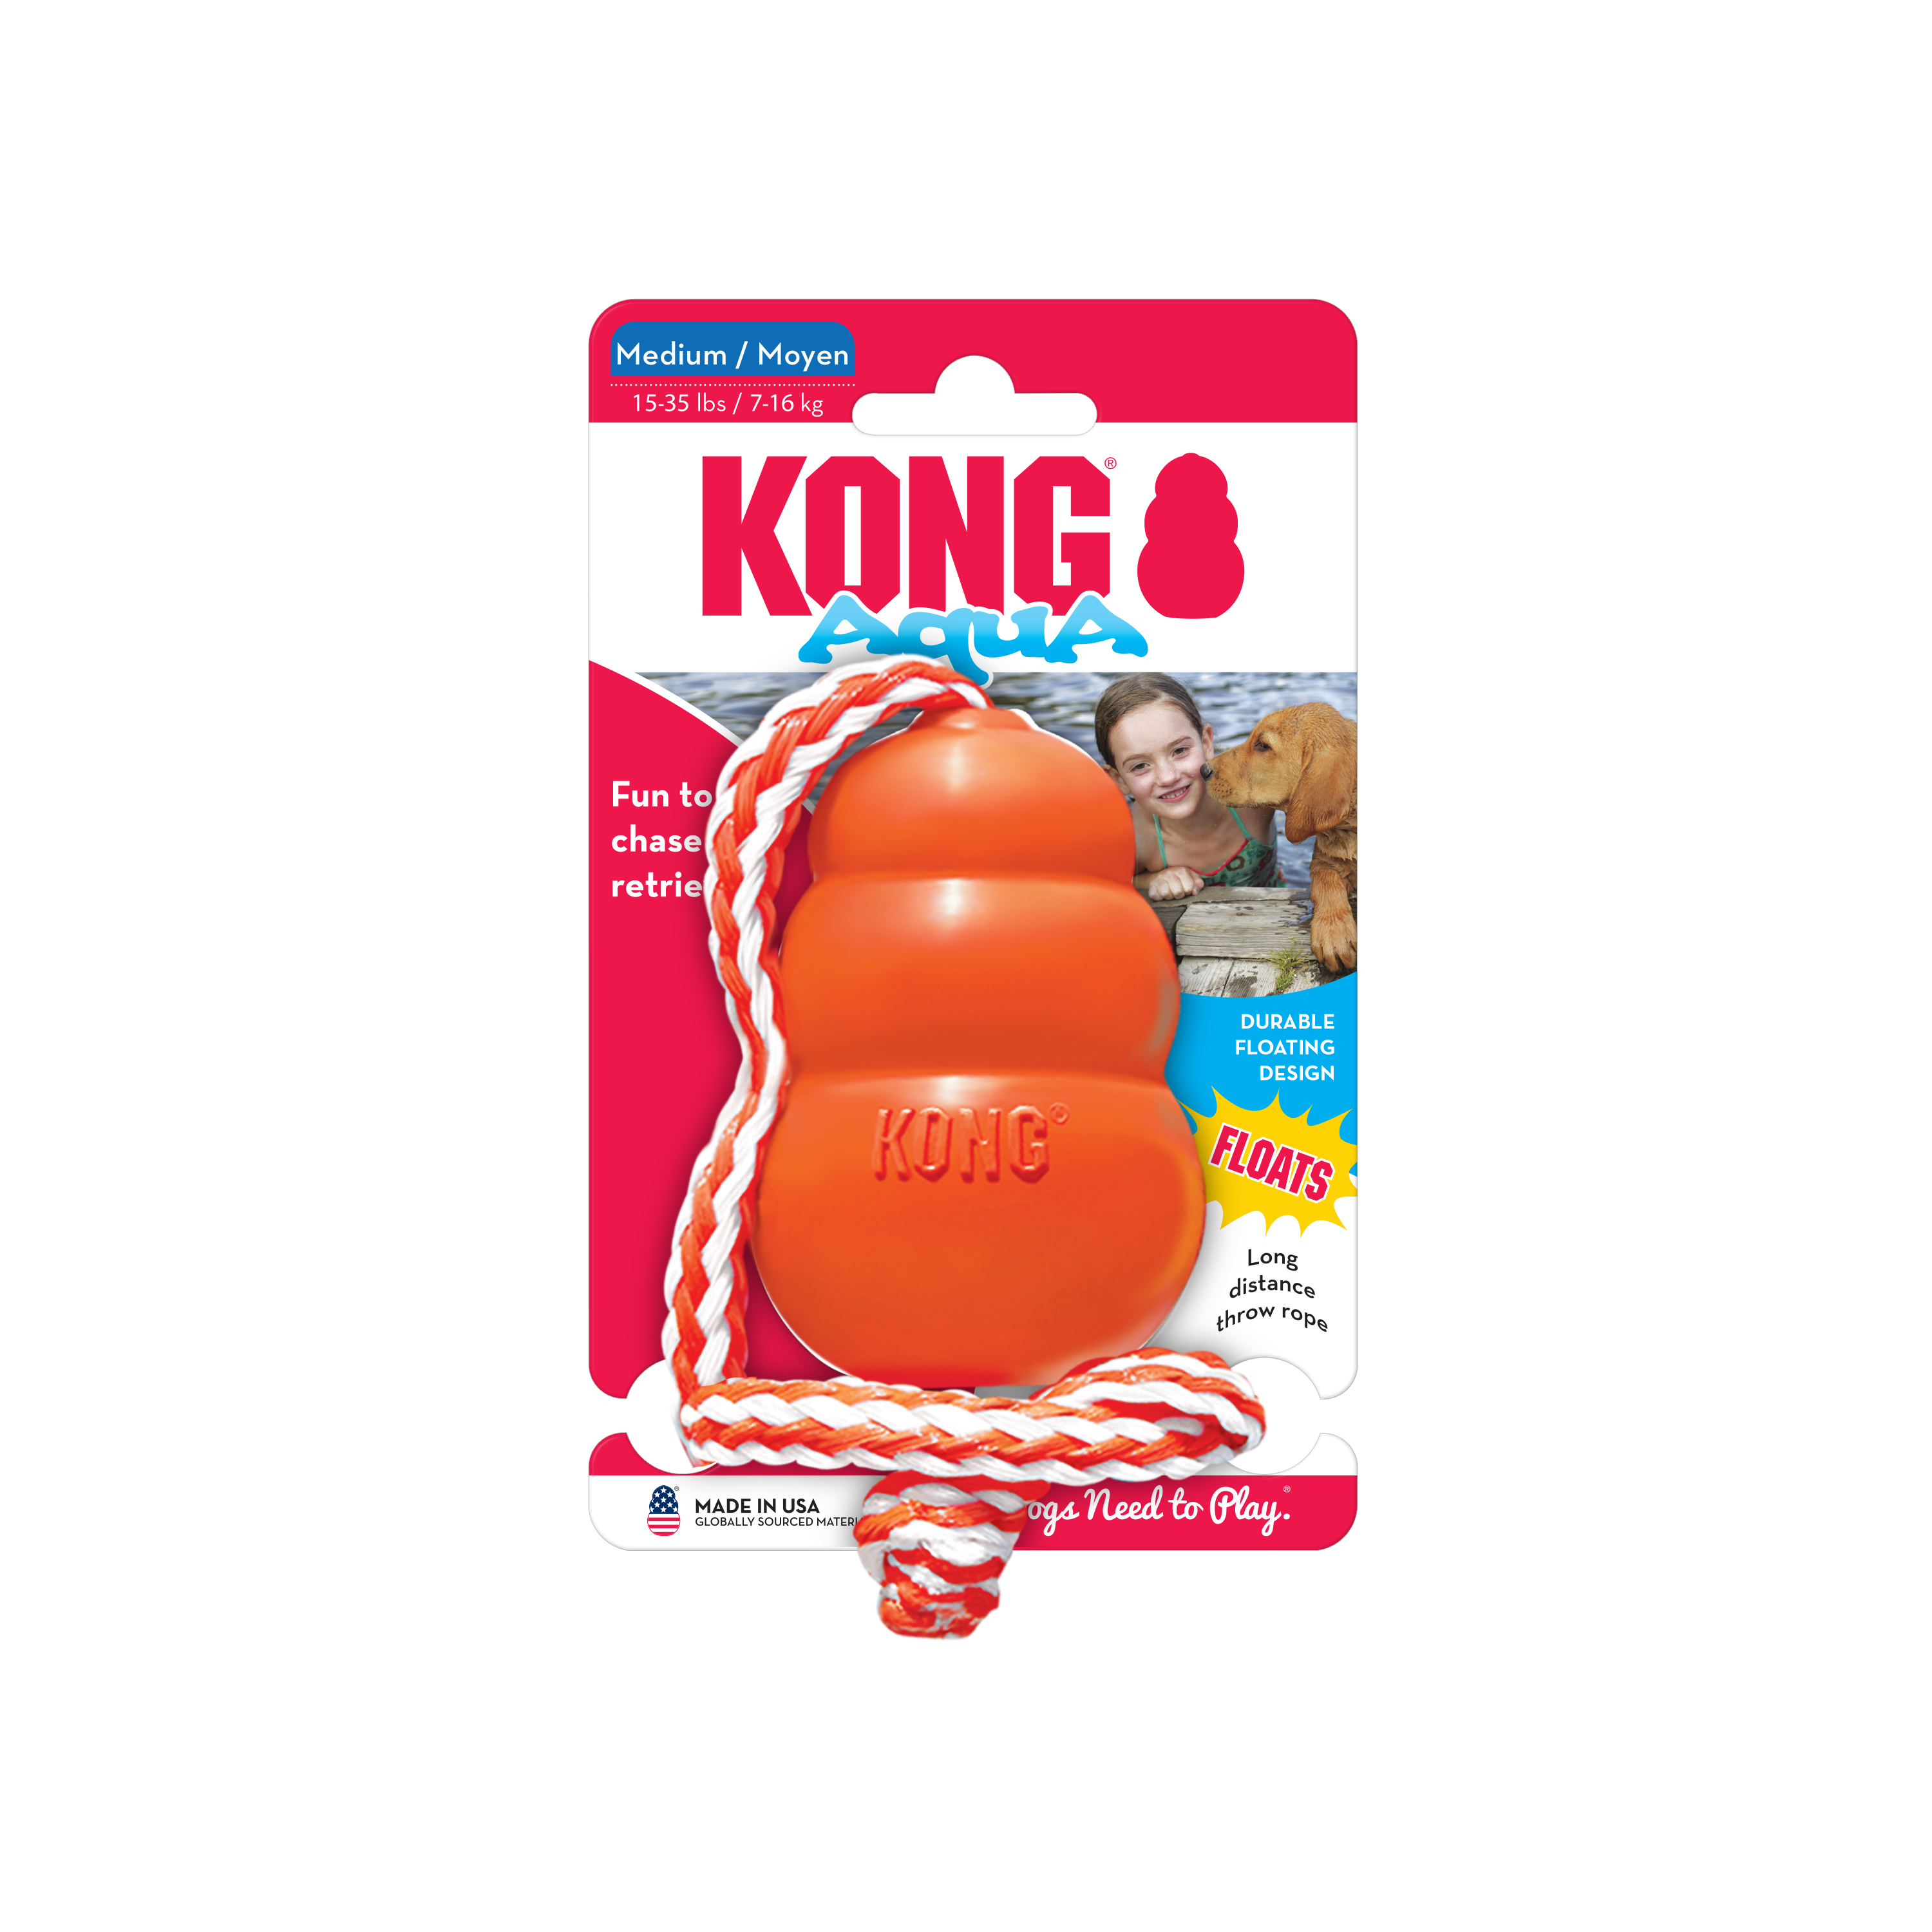 KONG Aqua product image